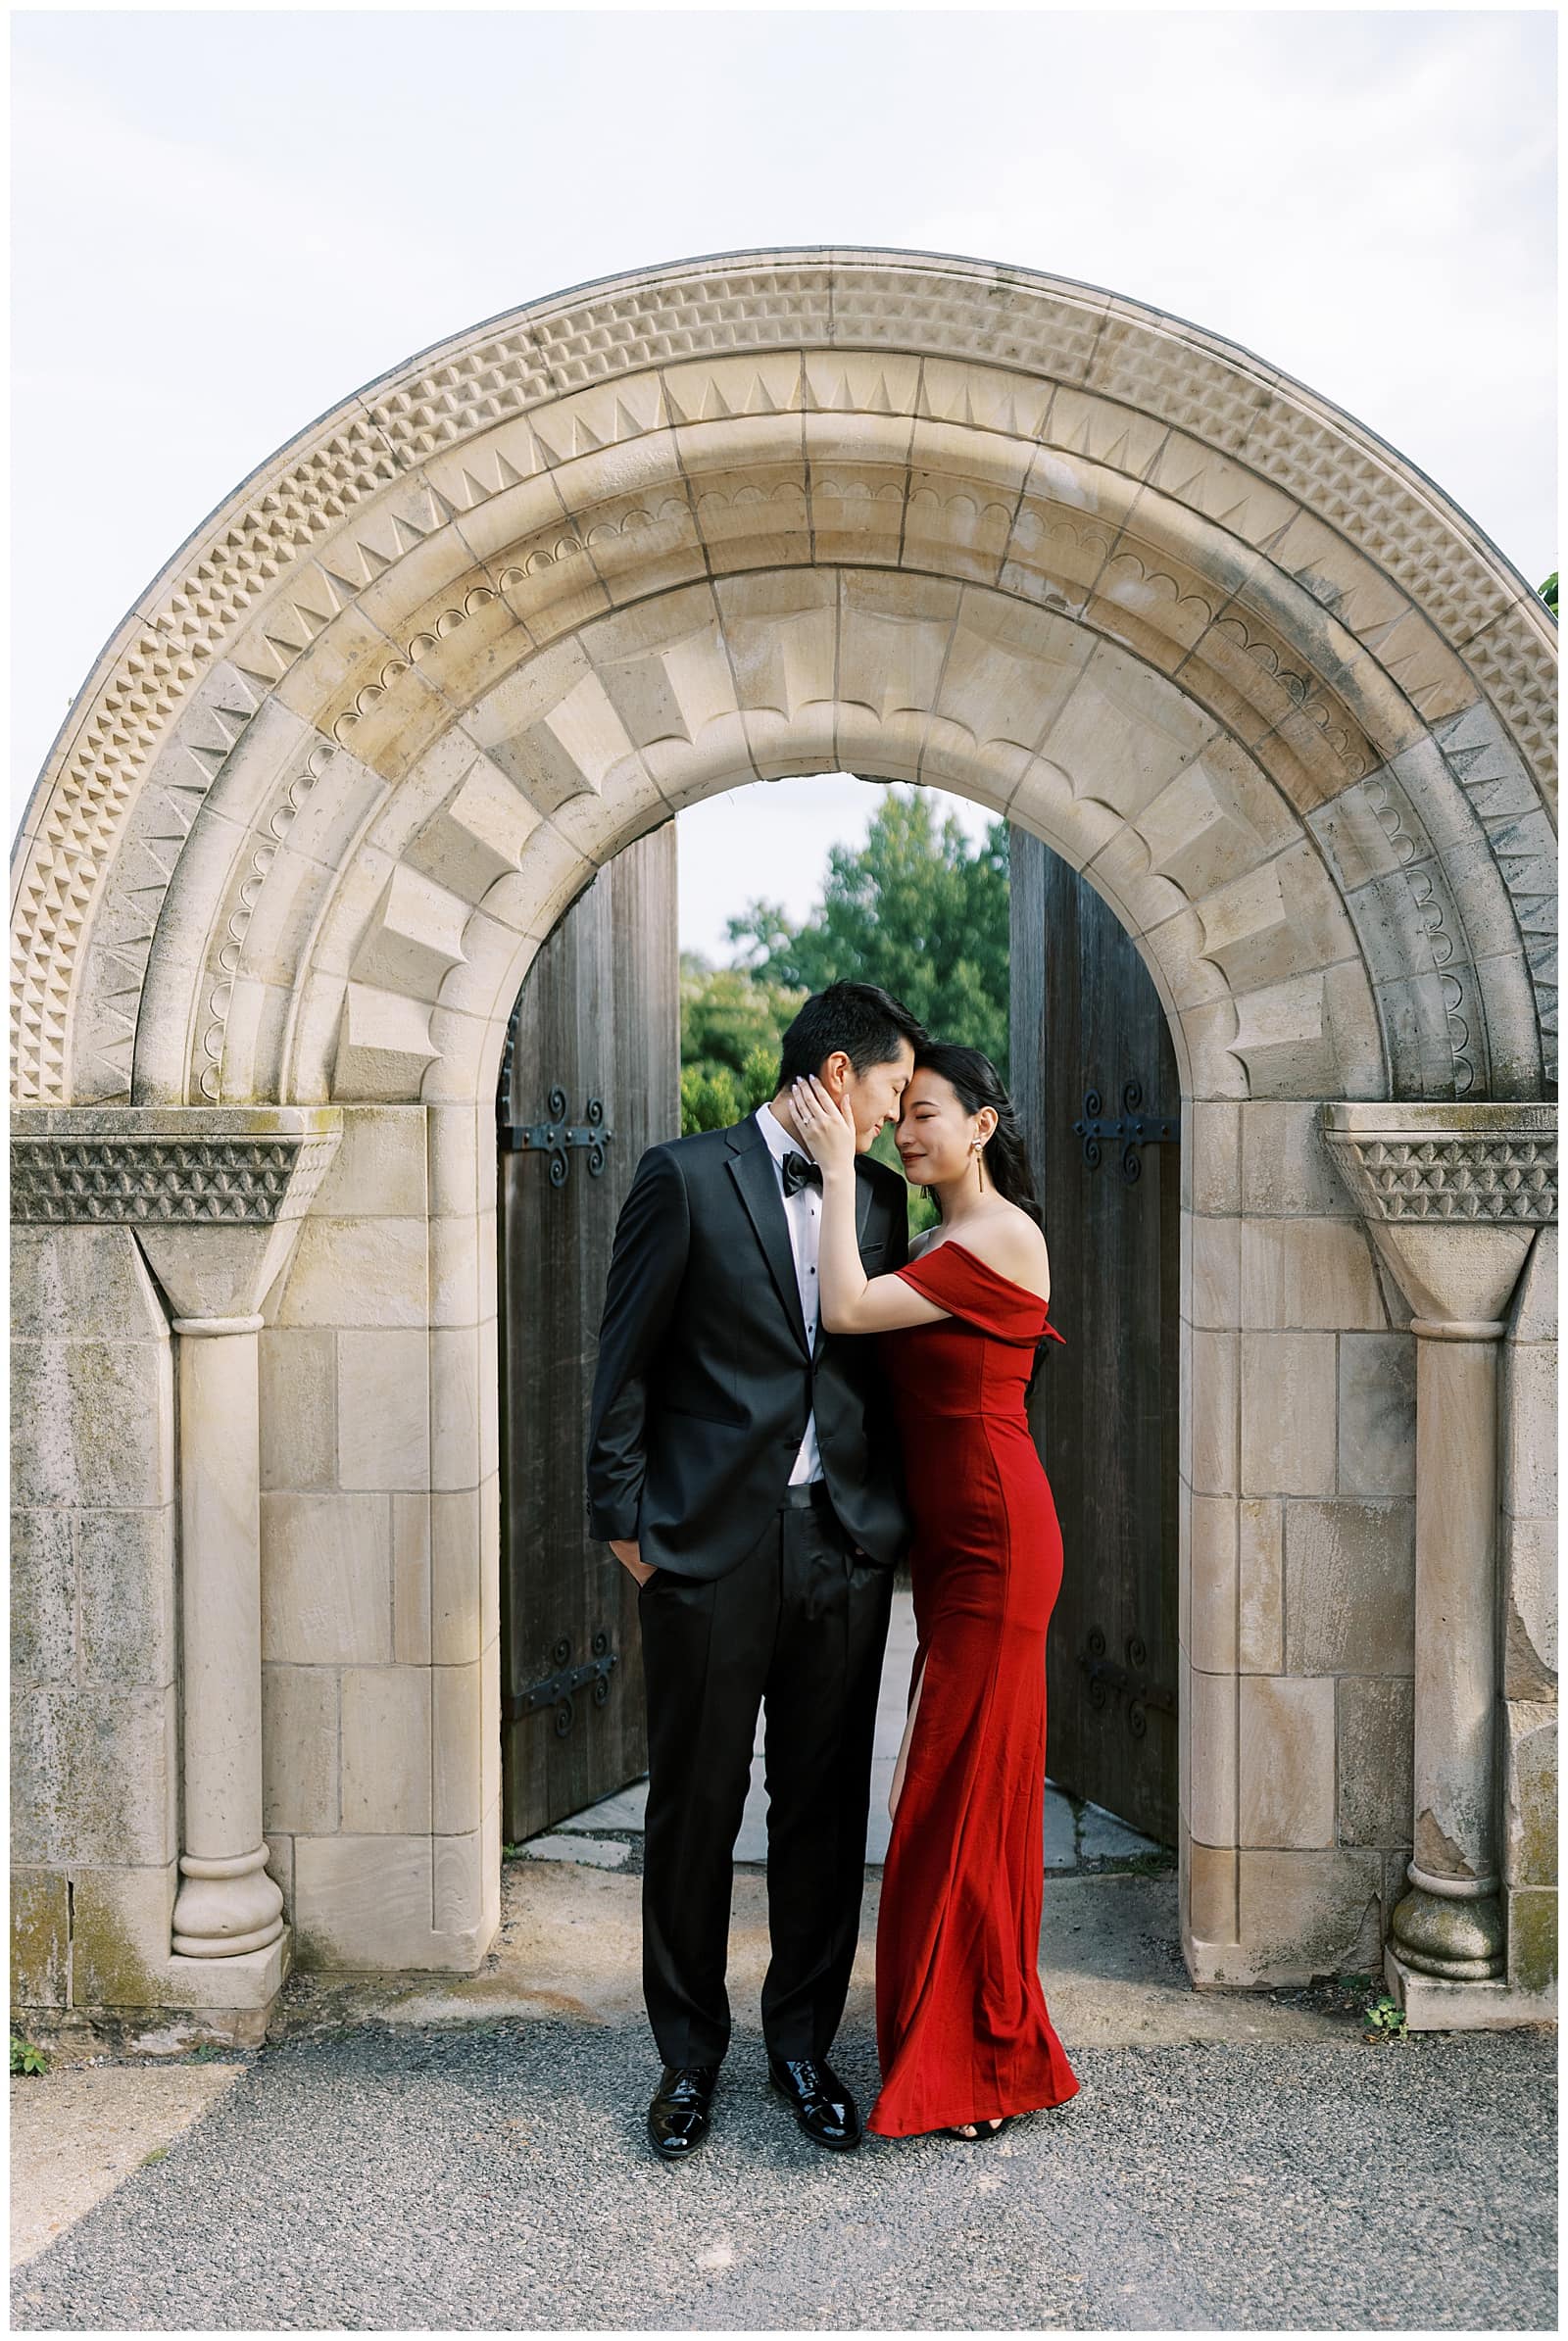 Danielle-Defayette-Photography-Washington-National-Cathedral-Engagement-Photos_0018.jpg